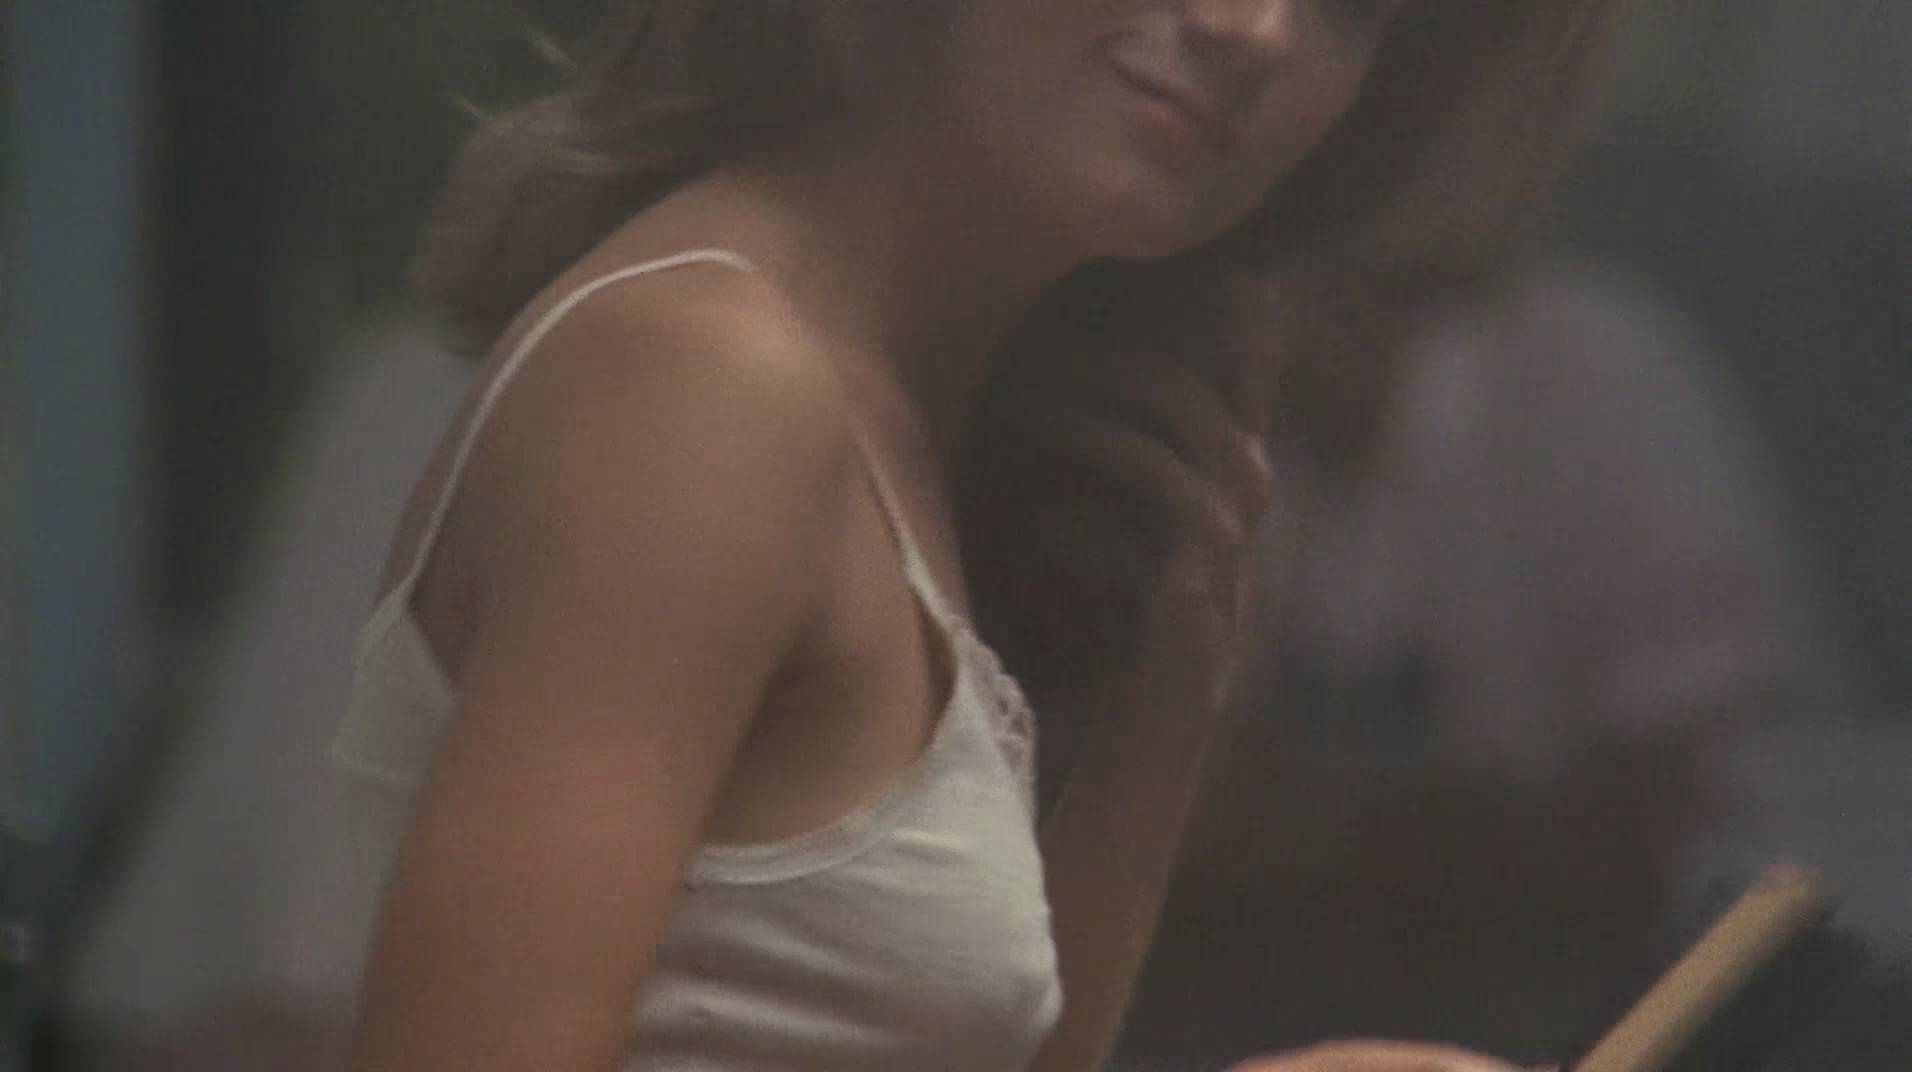 Lea Thompson - Some Kind of Wonderful (1987) "HOT" HD 1080p. 